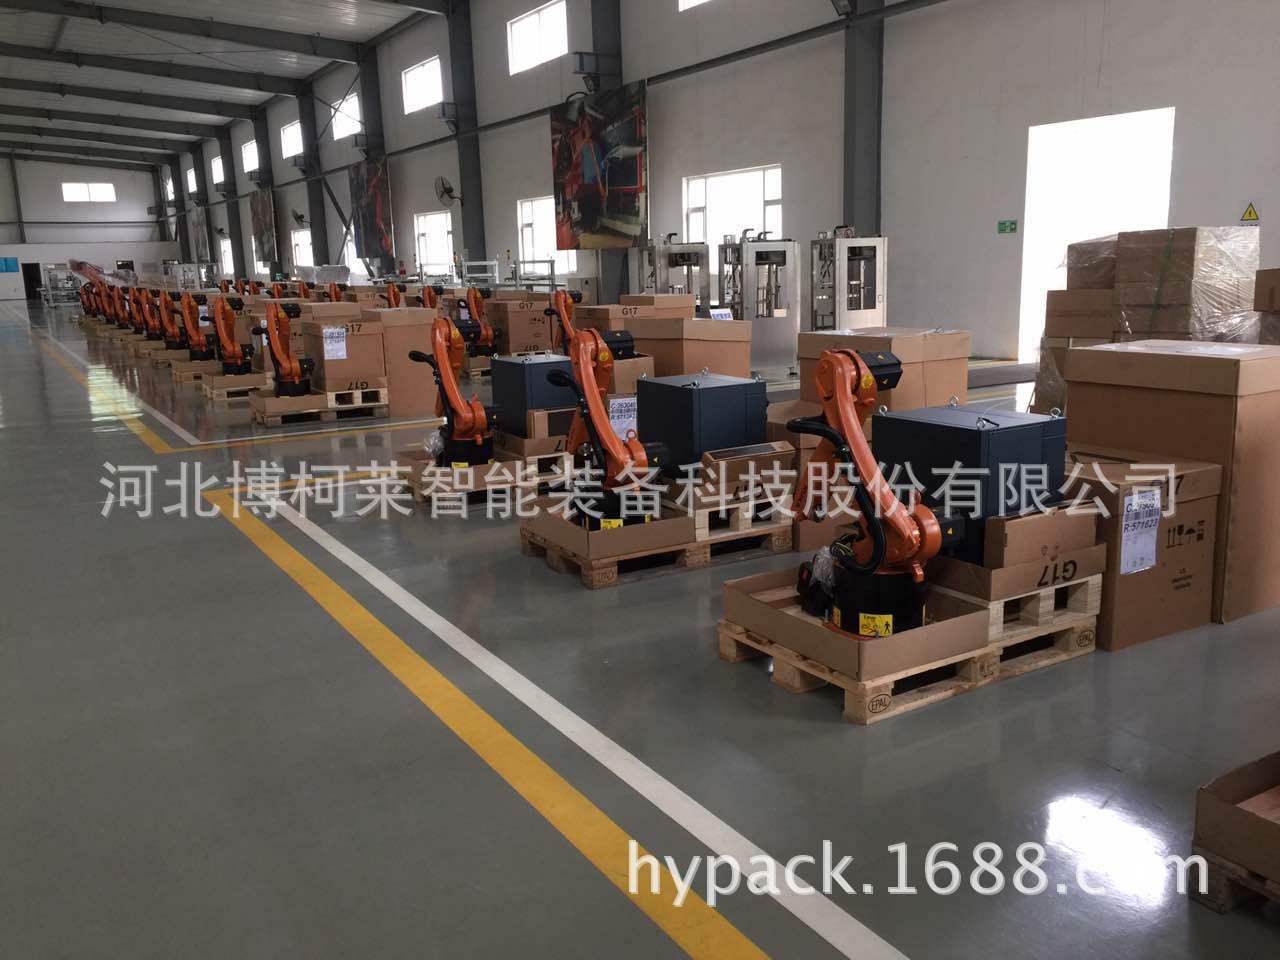 BOXLINE Hebei Intelligent Equipment Technology Co., Ltd